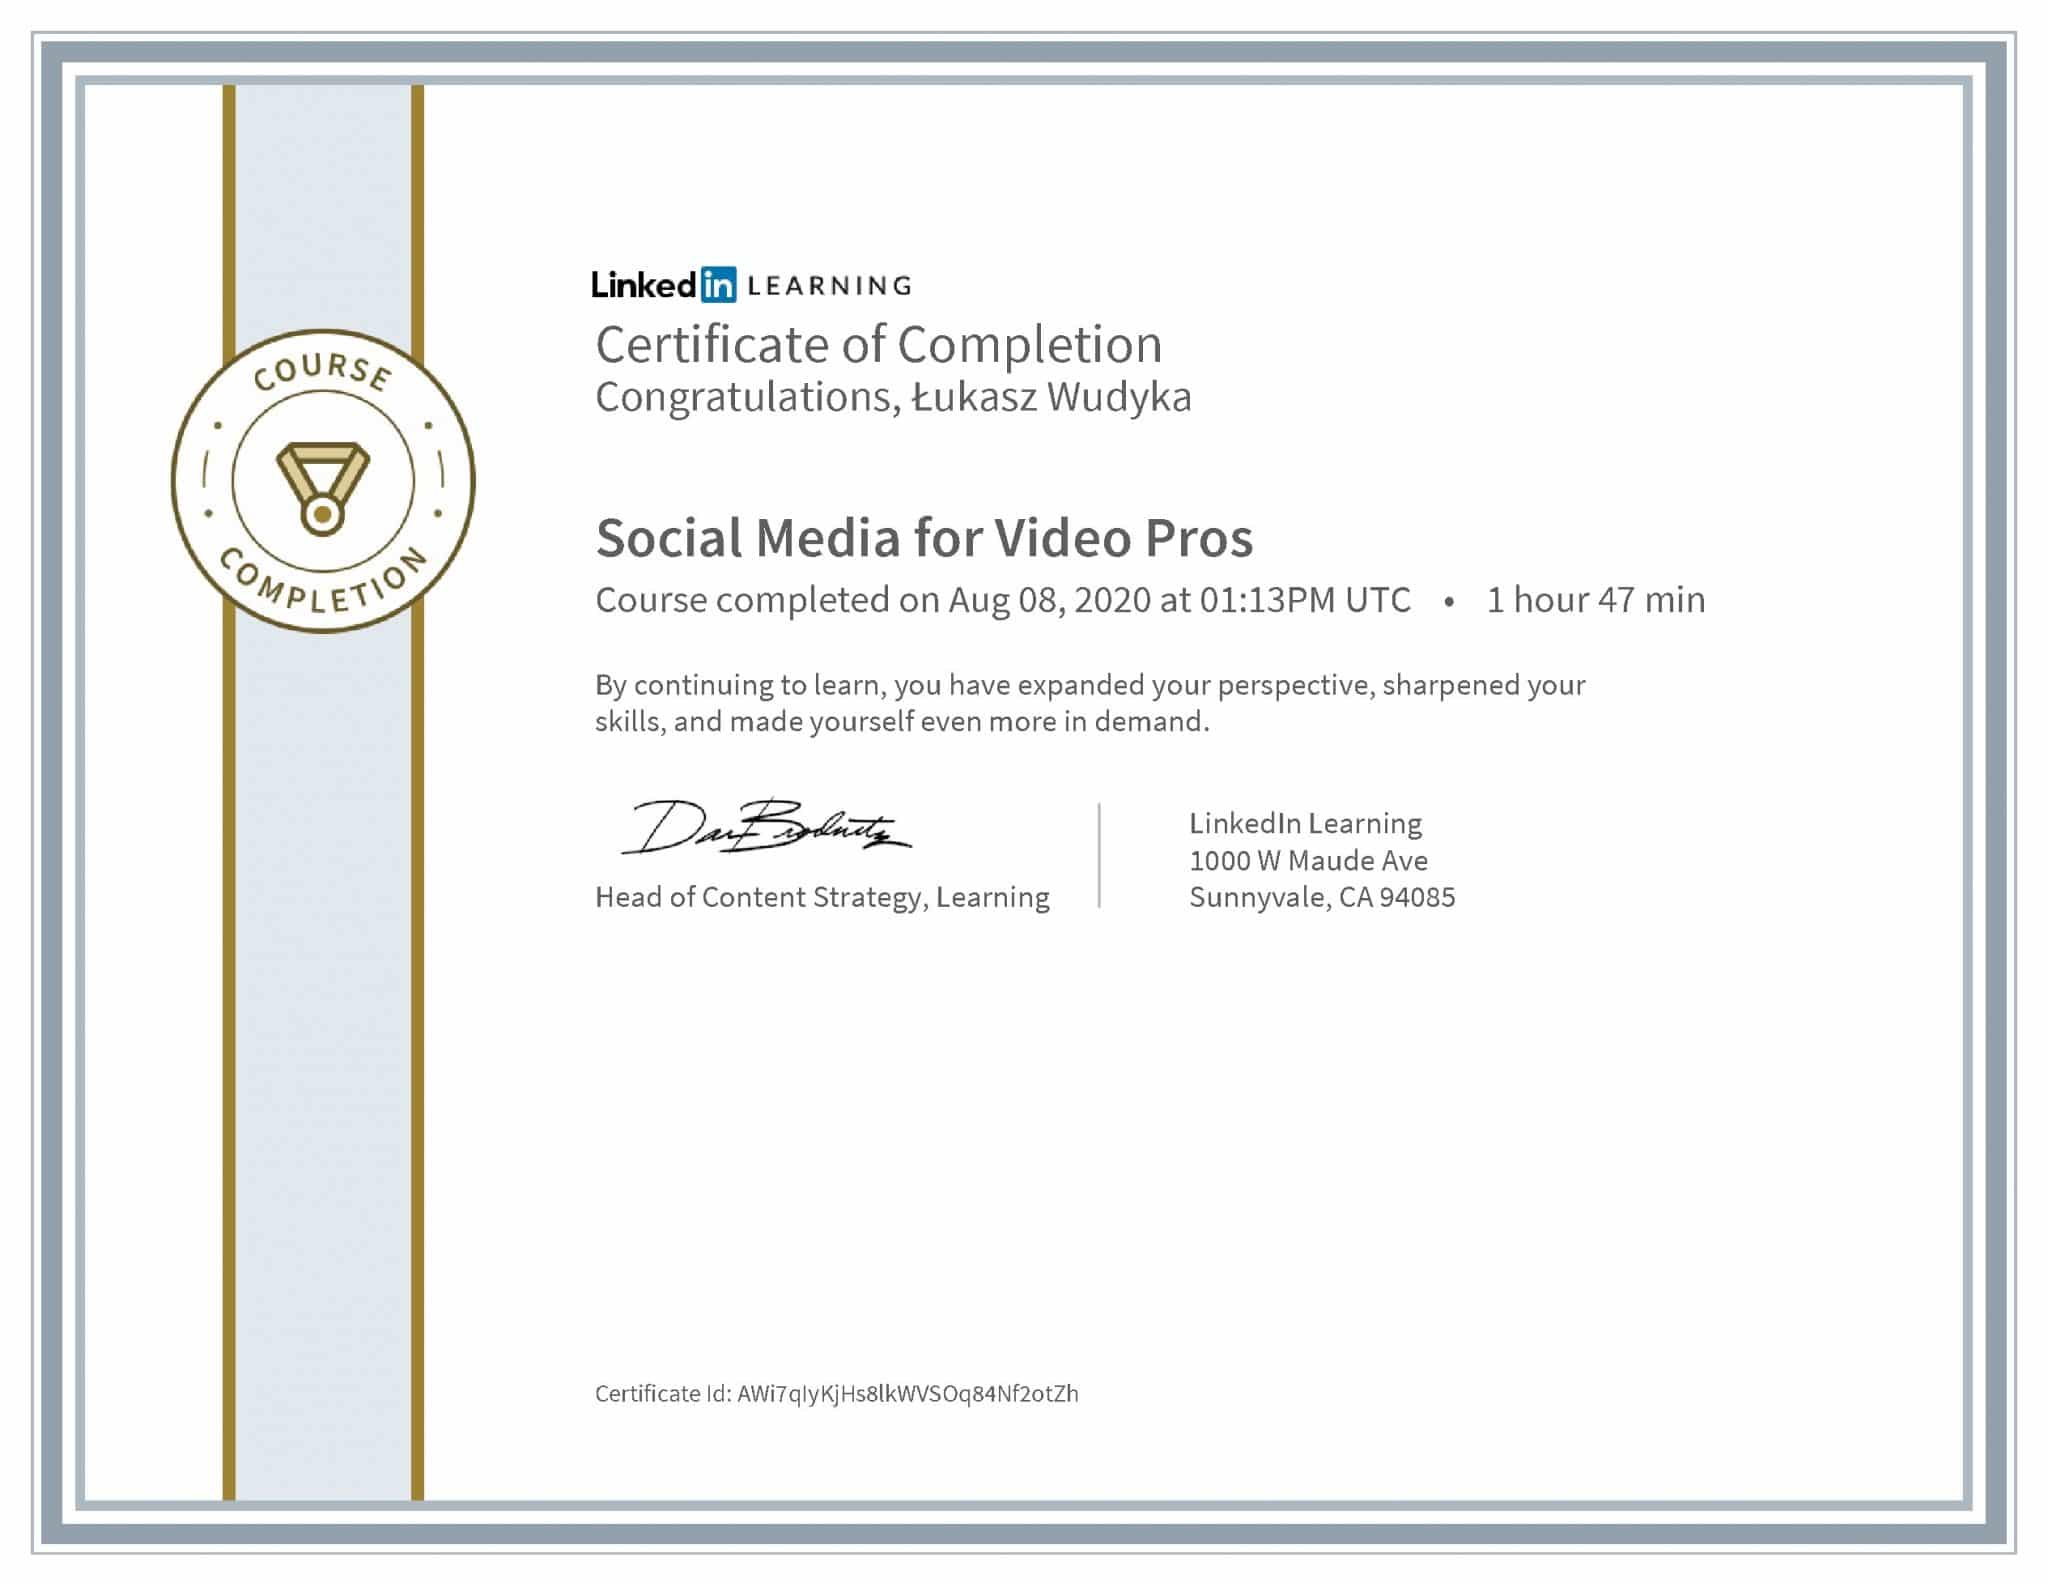 Łukasz Wudyka certyfikat LinkedIn Social Media for Video Pros